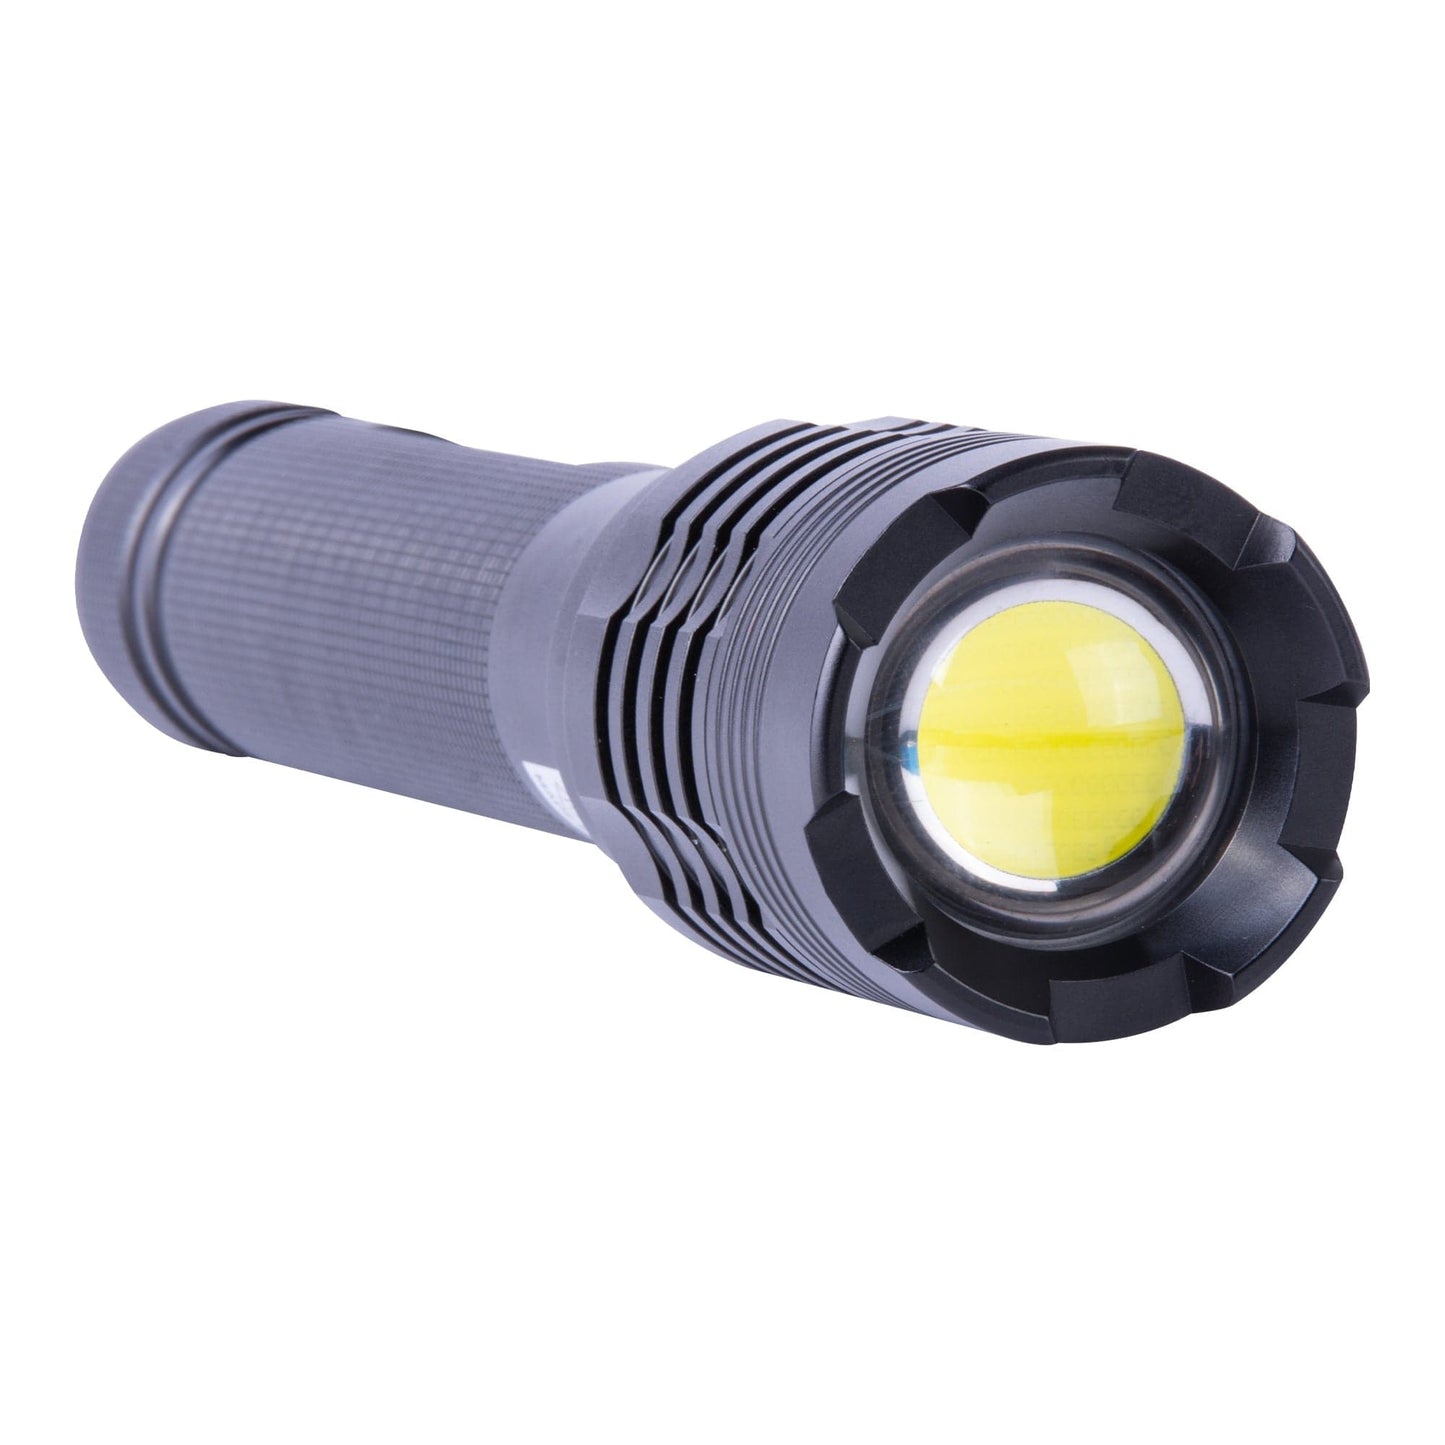 Brillar Flashlights Brillar Commander - 4000 Lumen USB Rechargeable Torch